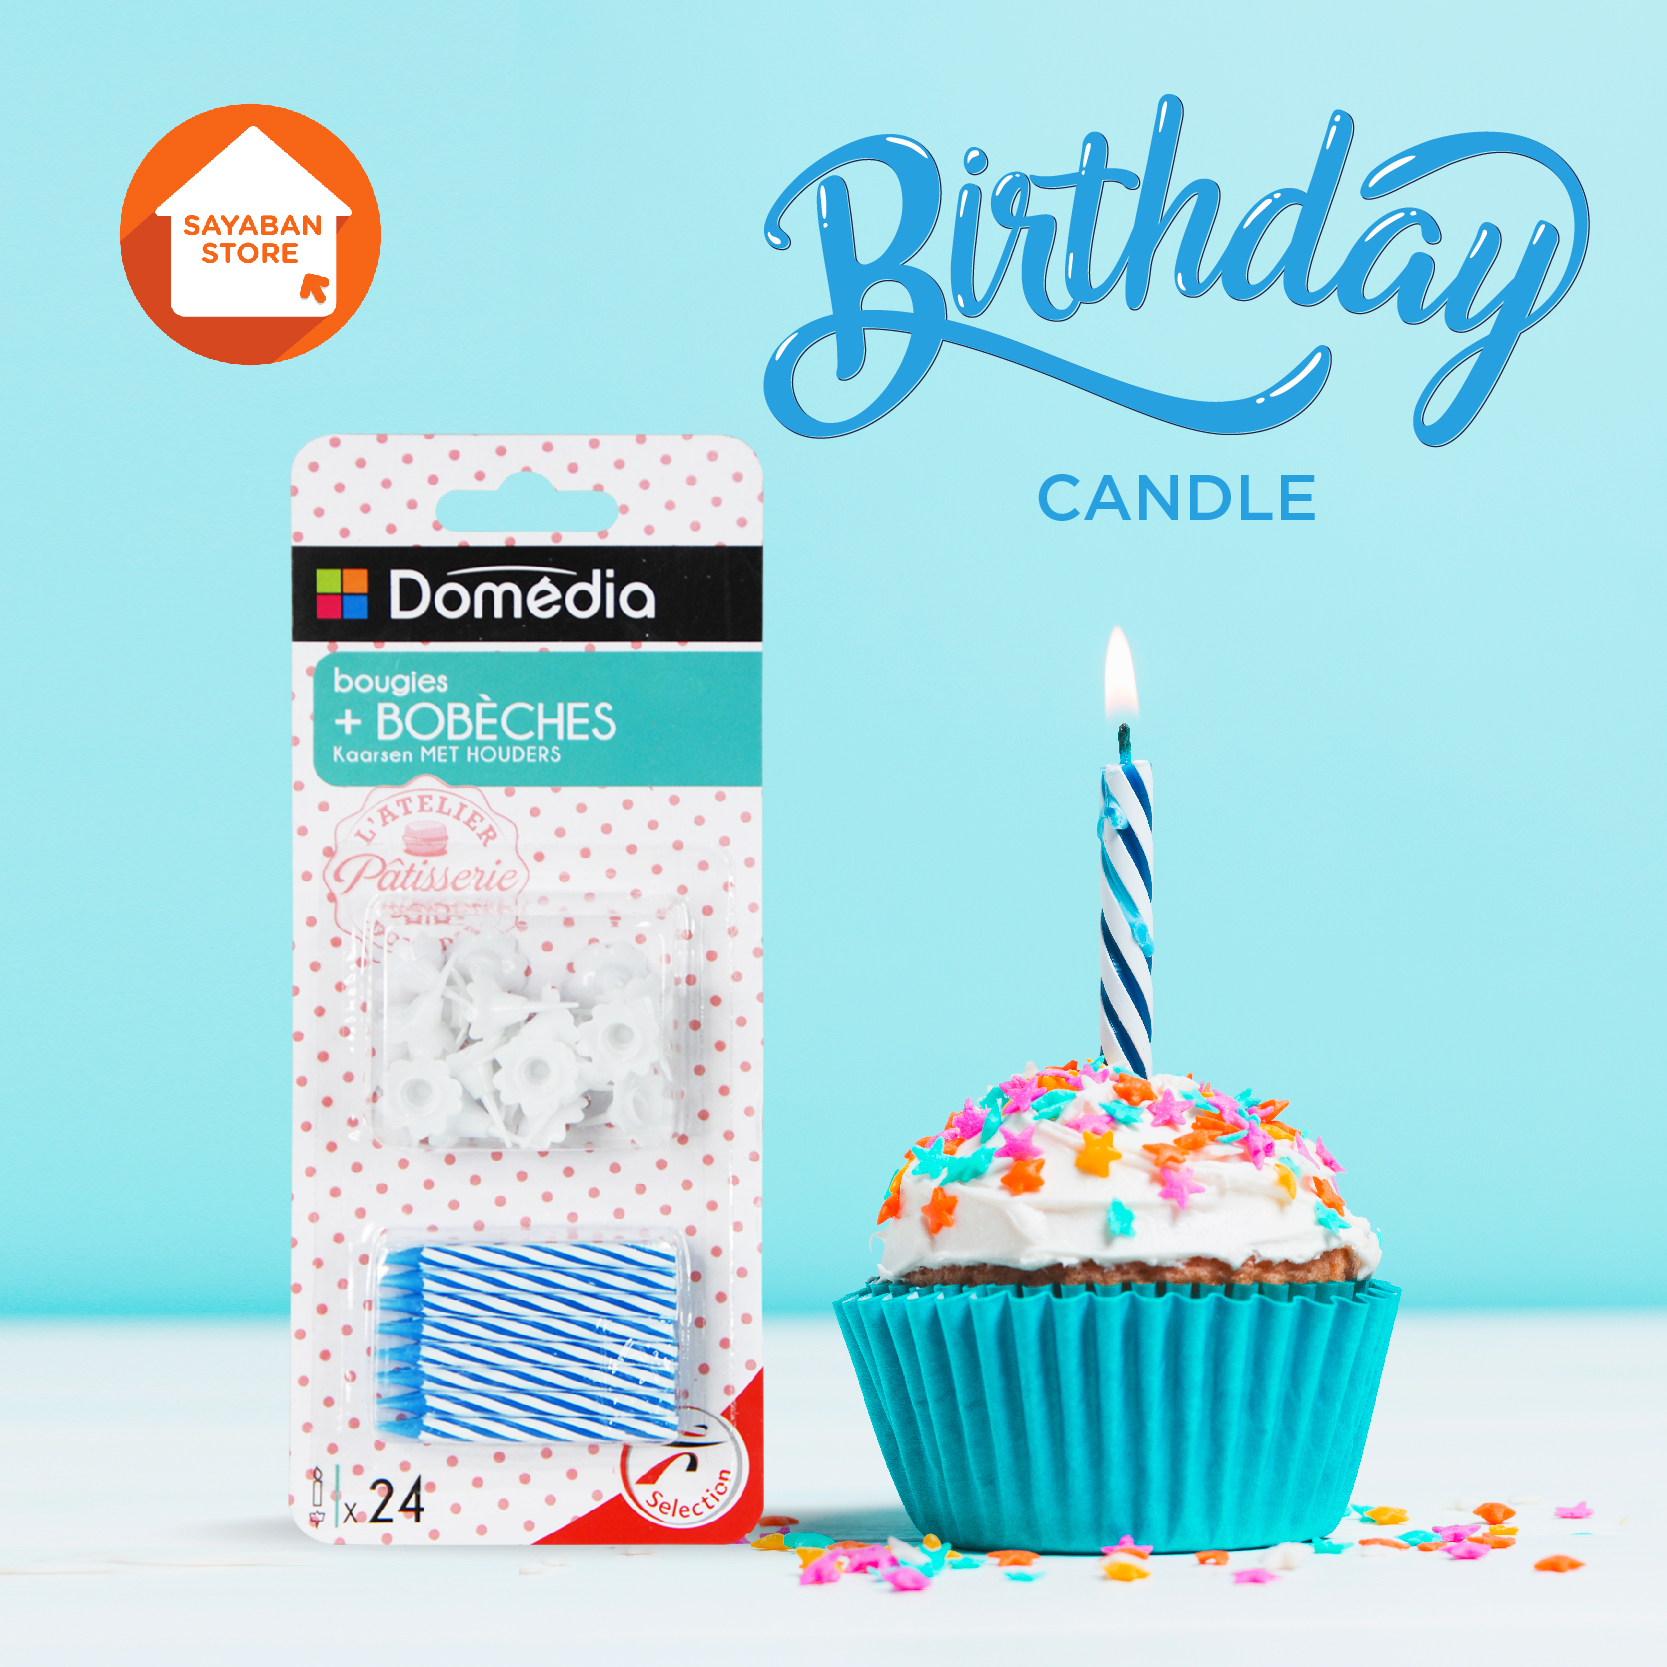 Birthday candle - เทียนวันเกิด สีฟ้า พร้อมฐานรอง แพ็คละ 24 เล่ม